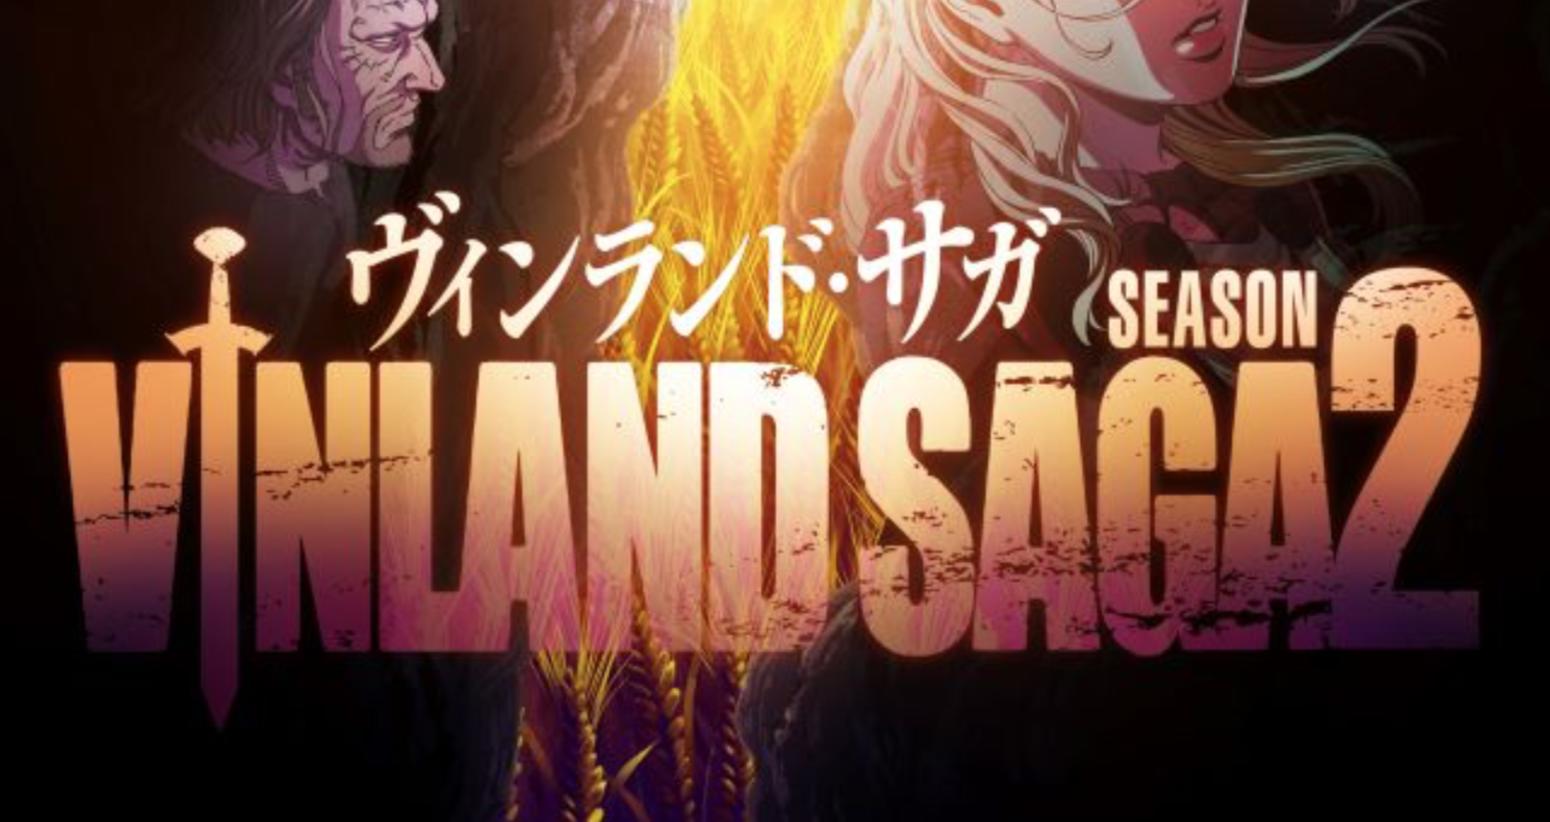 Vinland Saga Exec Reveals Season 2 Episode Count